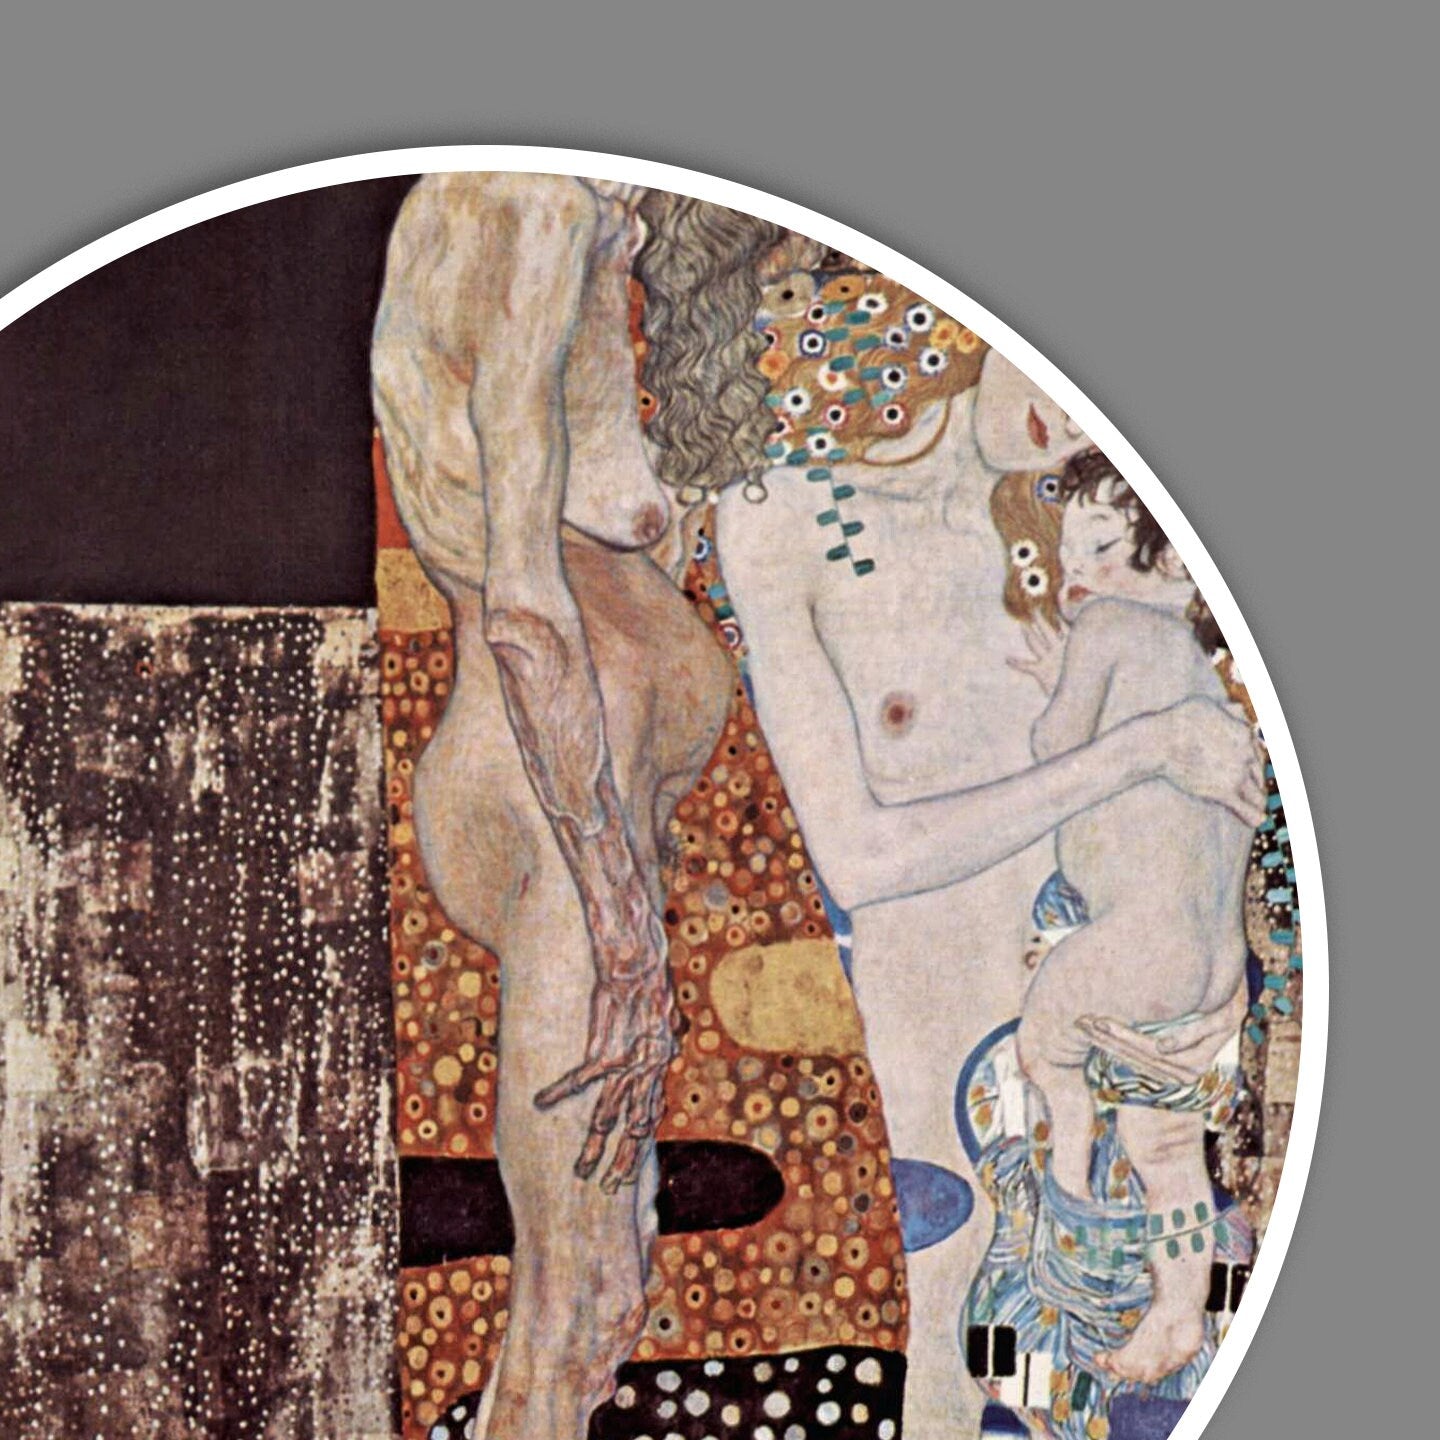 Gustav Klimt Print Set of 3 Exhibition Art, Exhibition Poster, Large Wall Decor